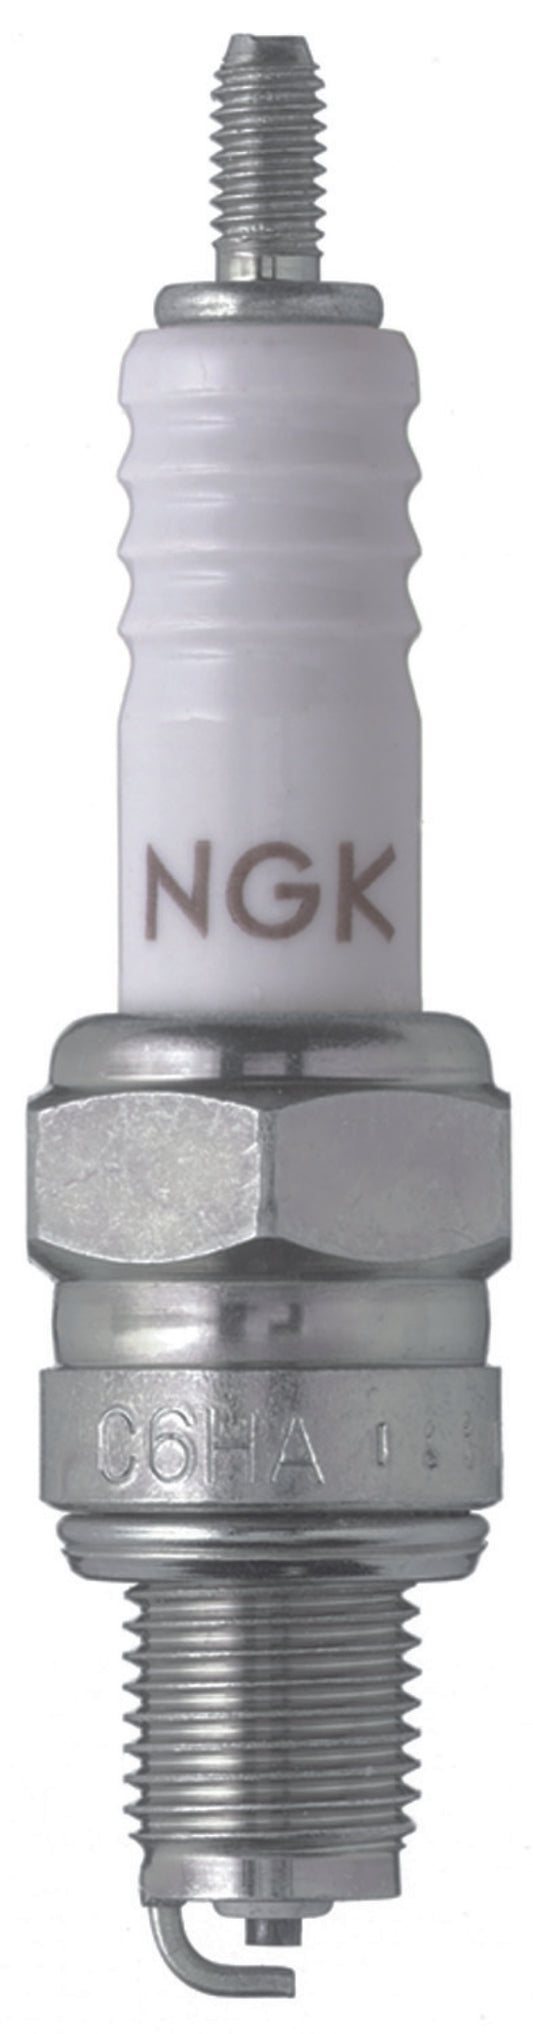 NGK Standard Spark Plug Box of 10 (C8HA)